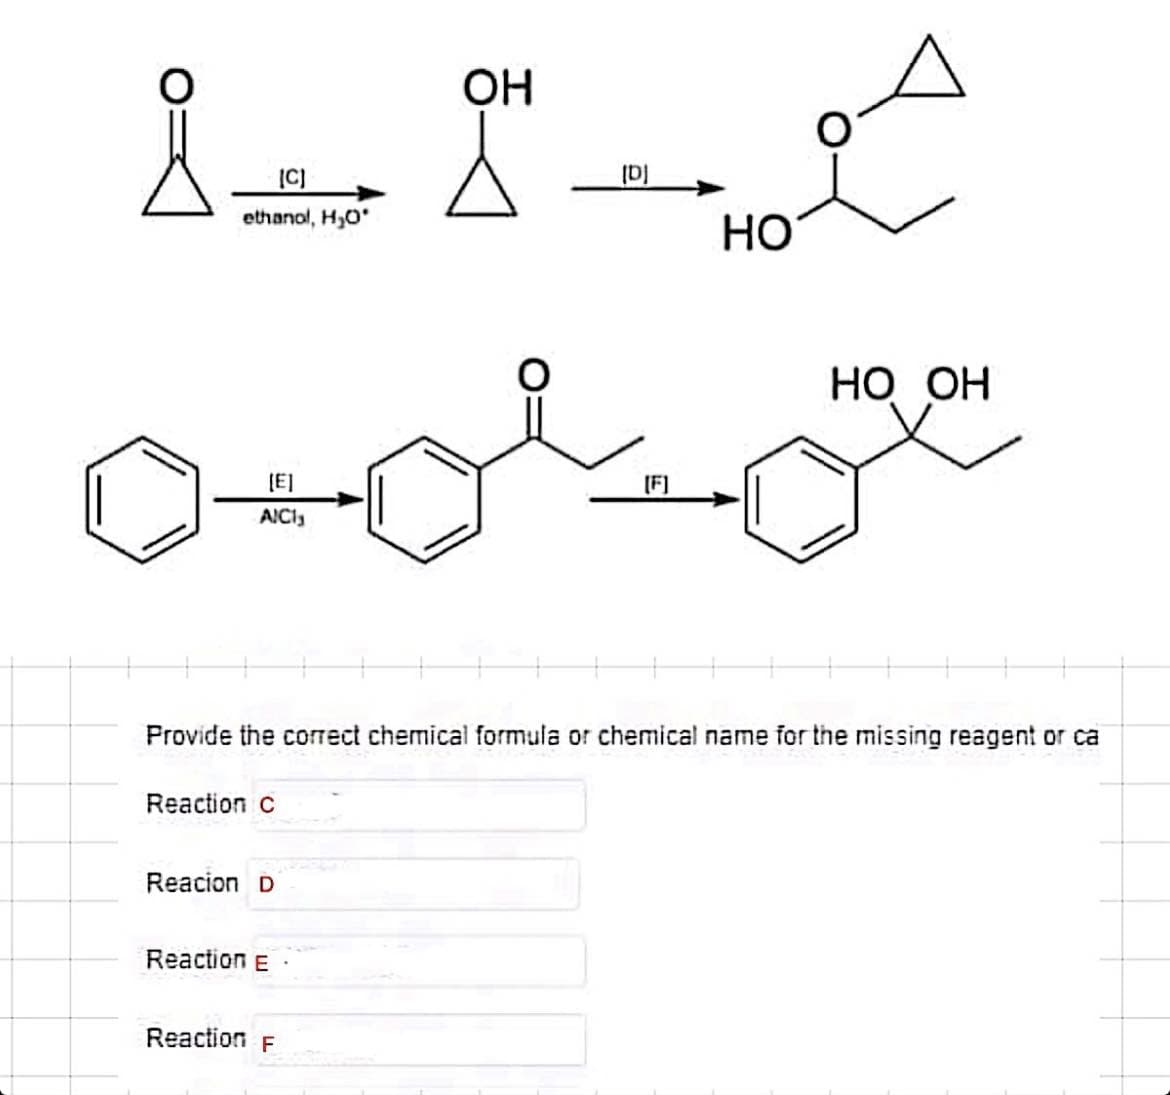 ܒܫܬ ܝܢܬ
etthanol, HO'
04-
[E]
AIC1₂
Reaction C
Reacion D
Reaction E
ОН
Reaction F
D]
Provide the correct chemical formula or chemical name for the missing reagent or ca
F
Ho
Ho
НО ОН